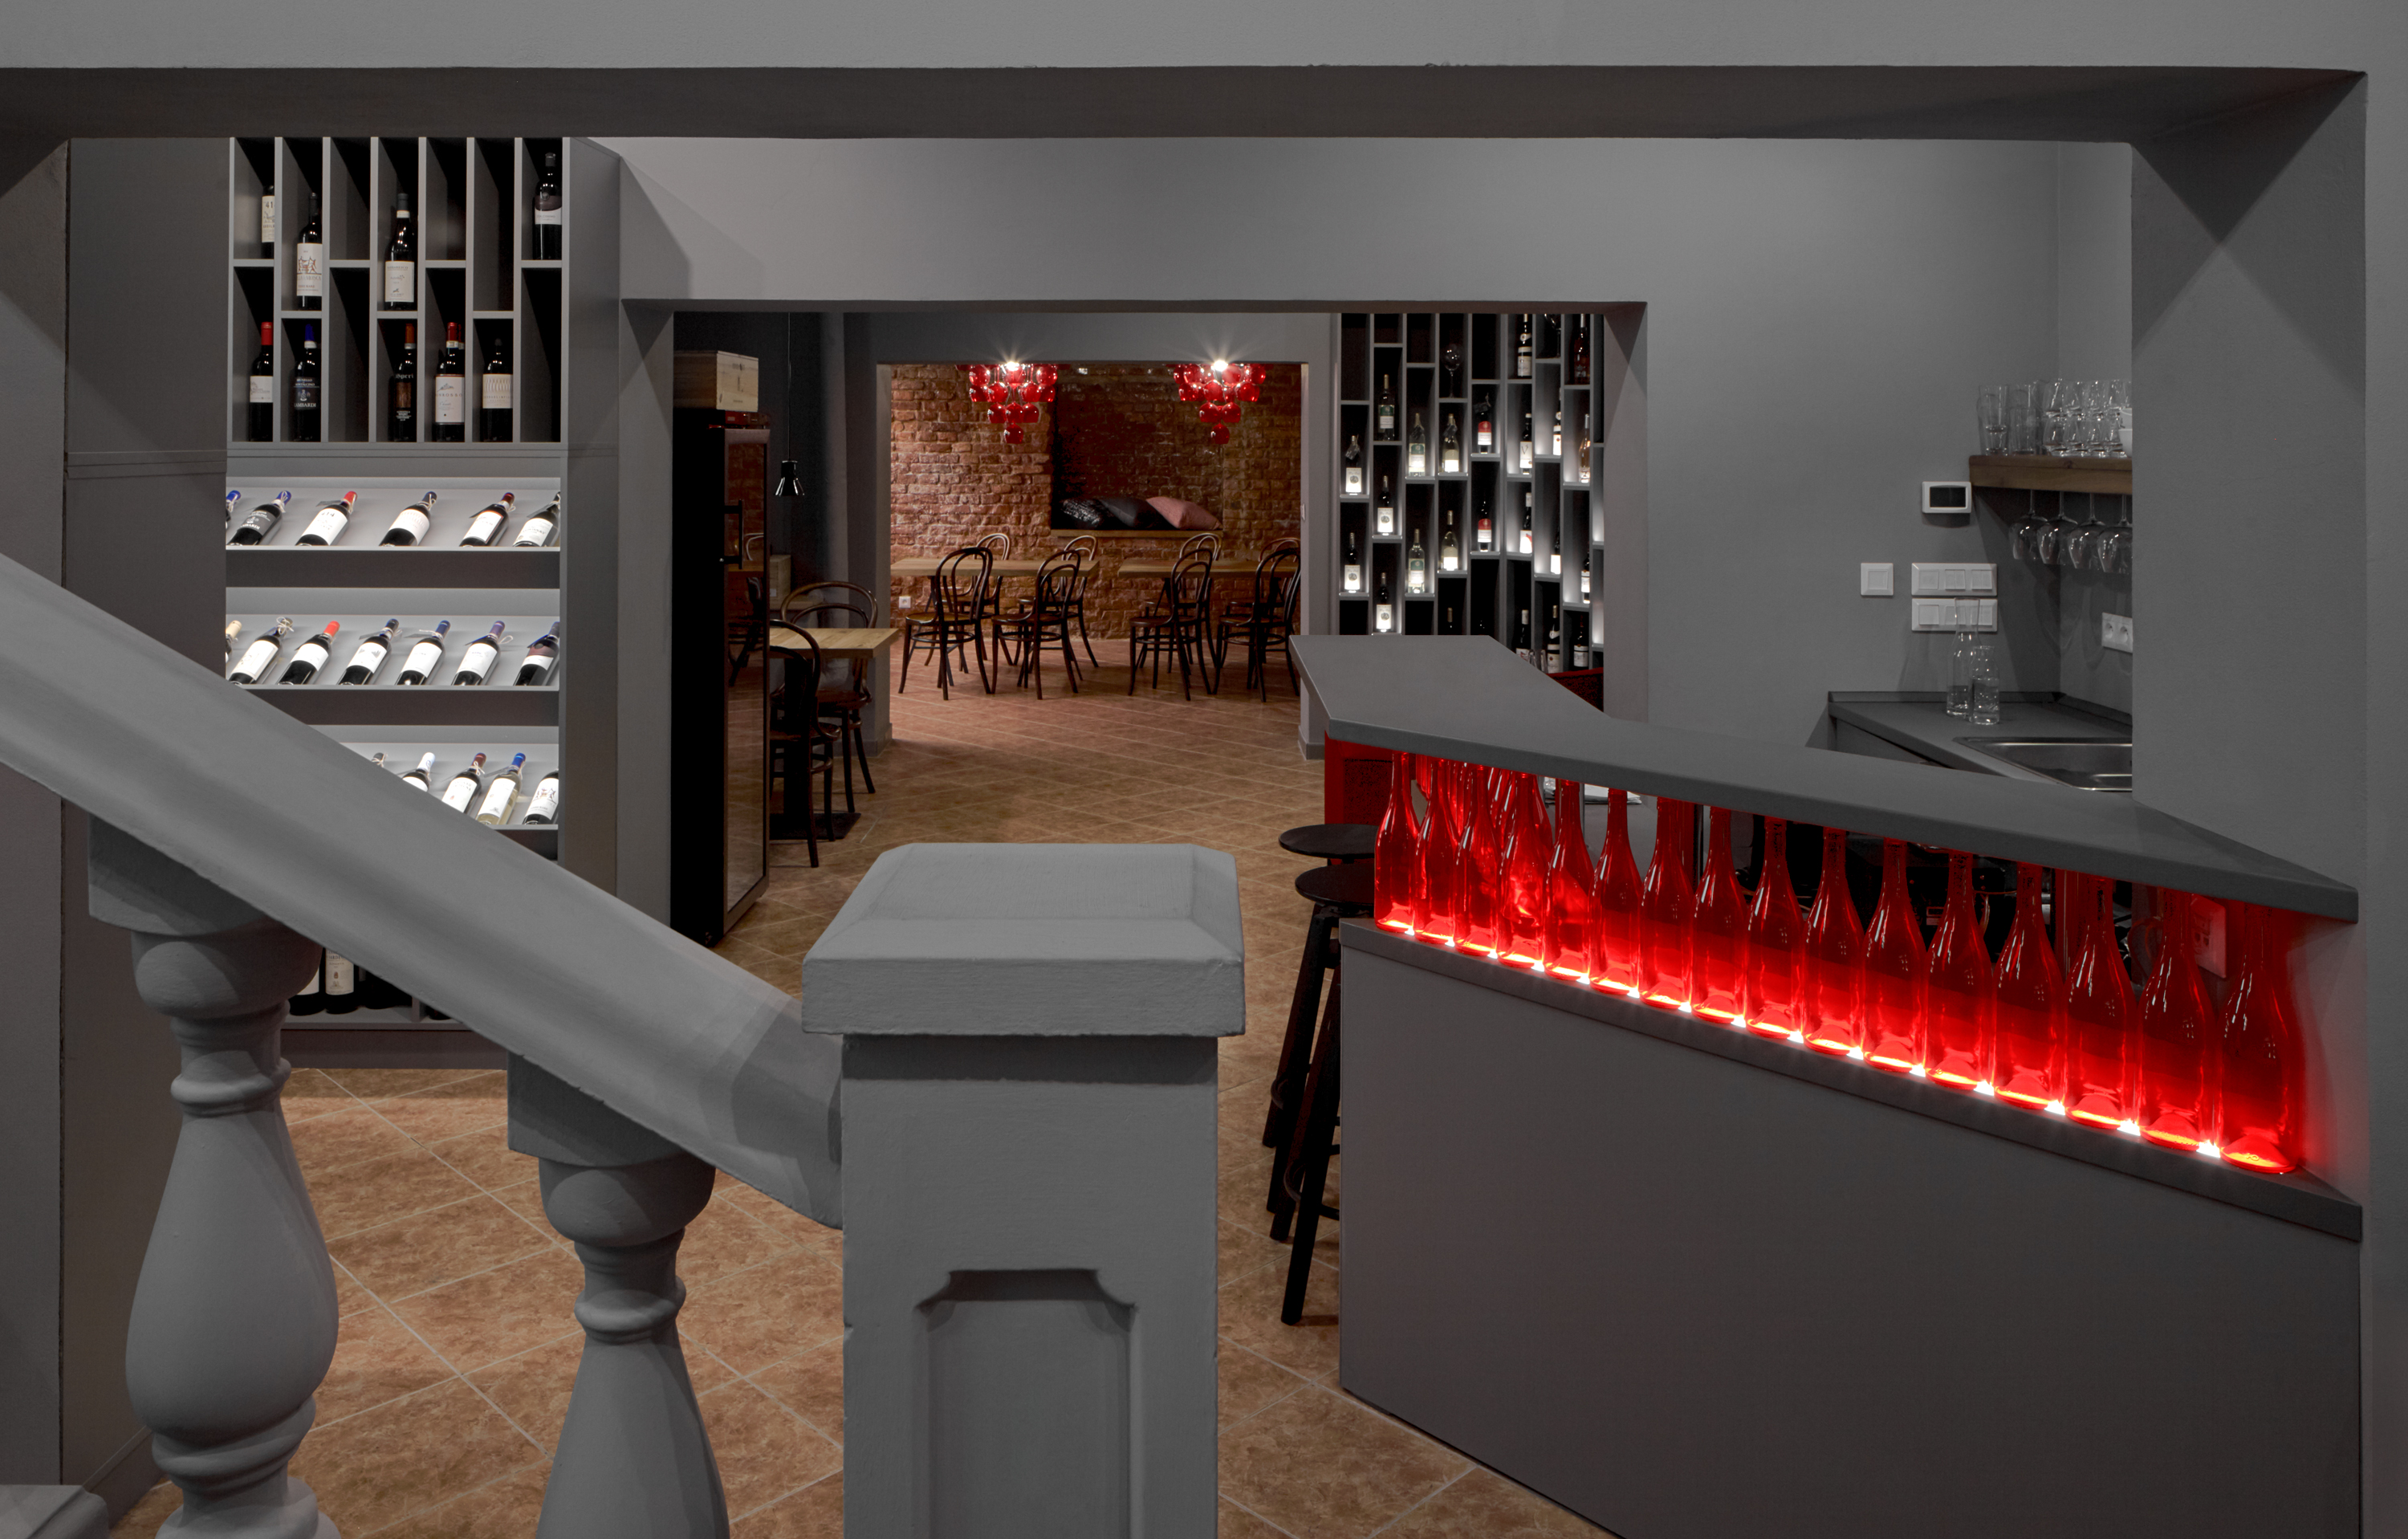 Lavino Wine Shop & Wine Bar